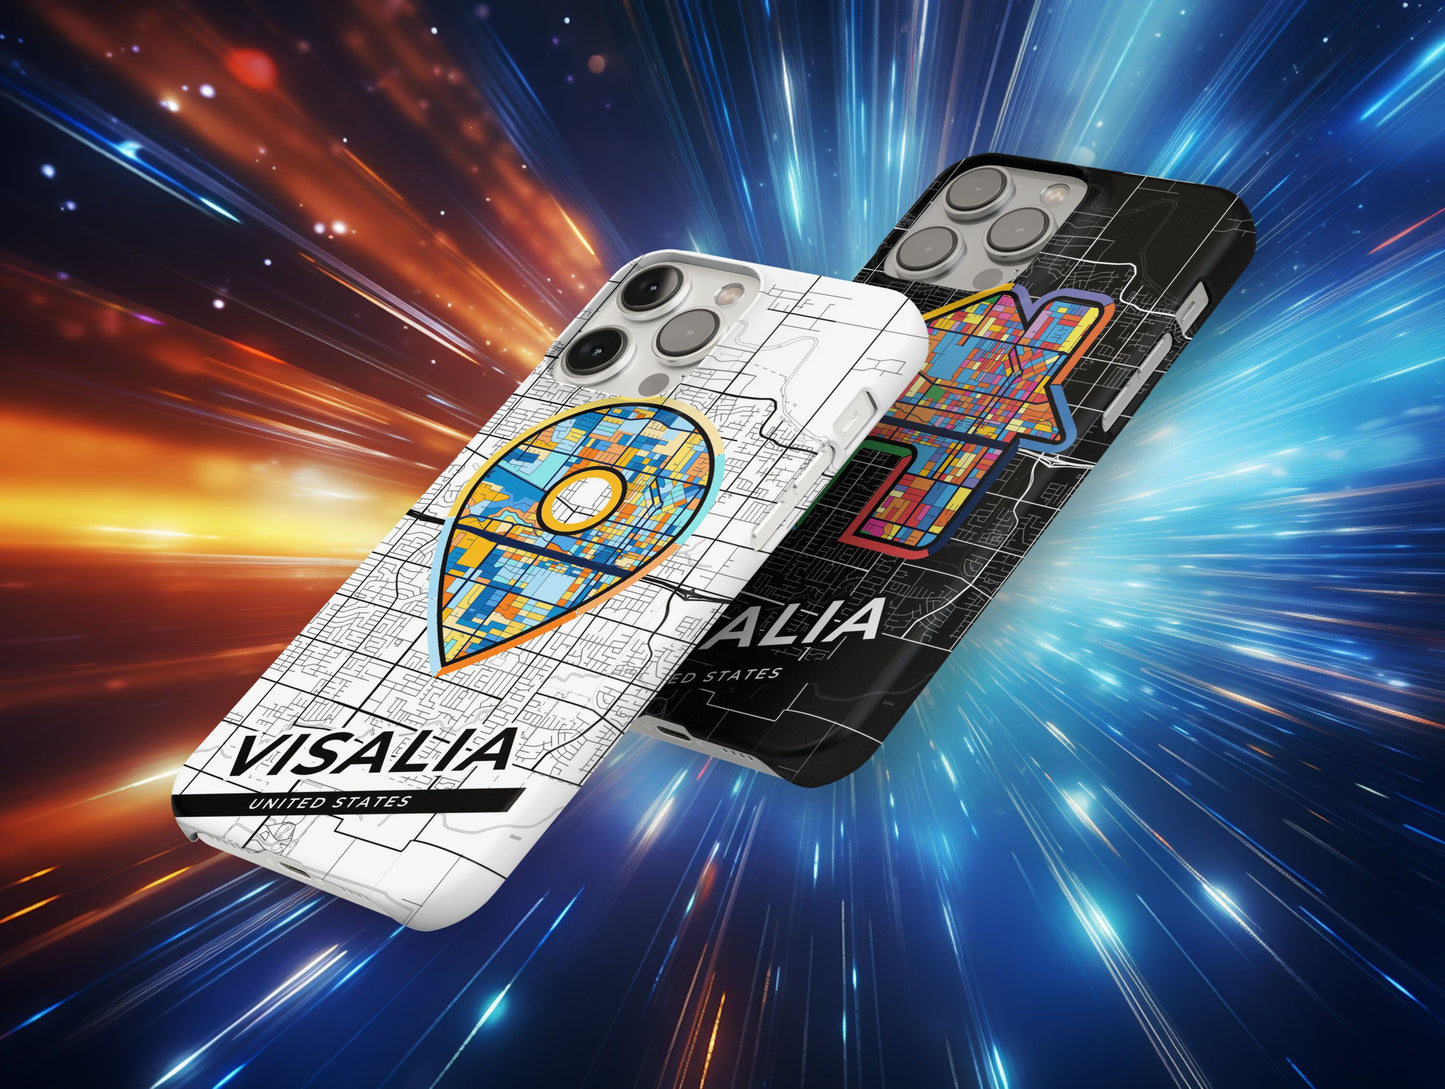 Visalia California slim phone case with colorful icon